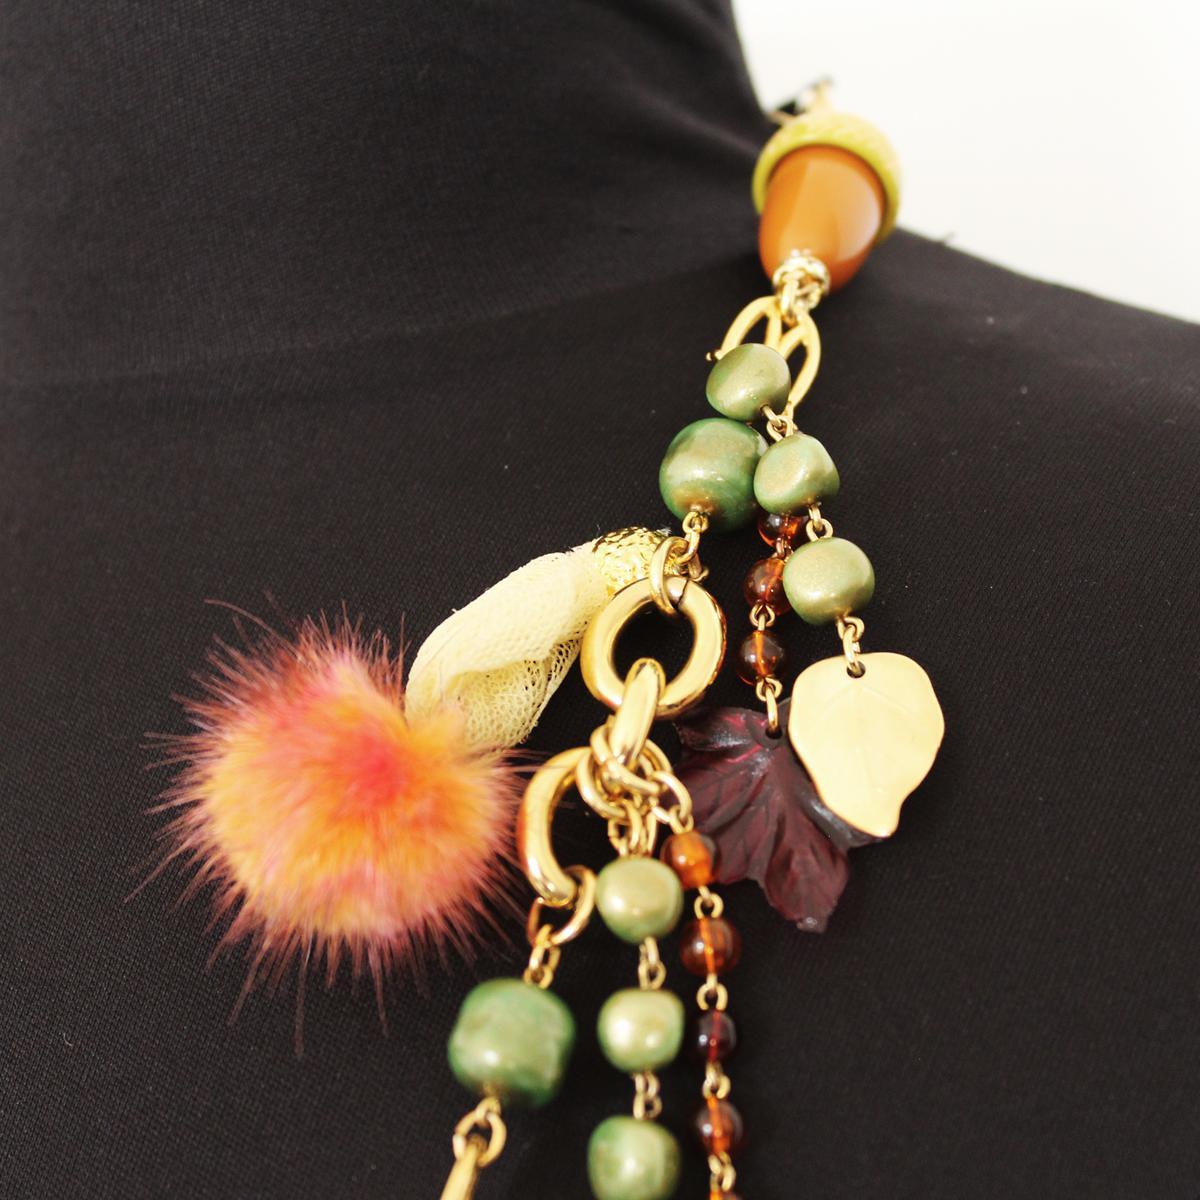 Carlo Zini Autumn Fruits Necklace with Mink Puff In New Condition For Sale In Gazzaniga (BG), IT